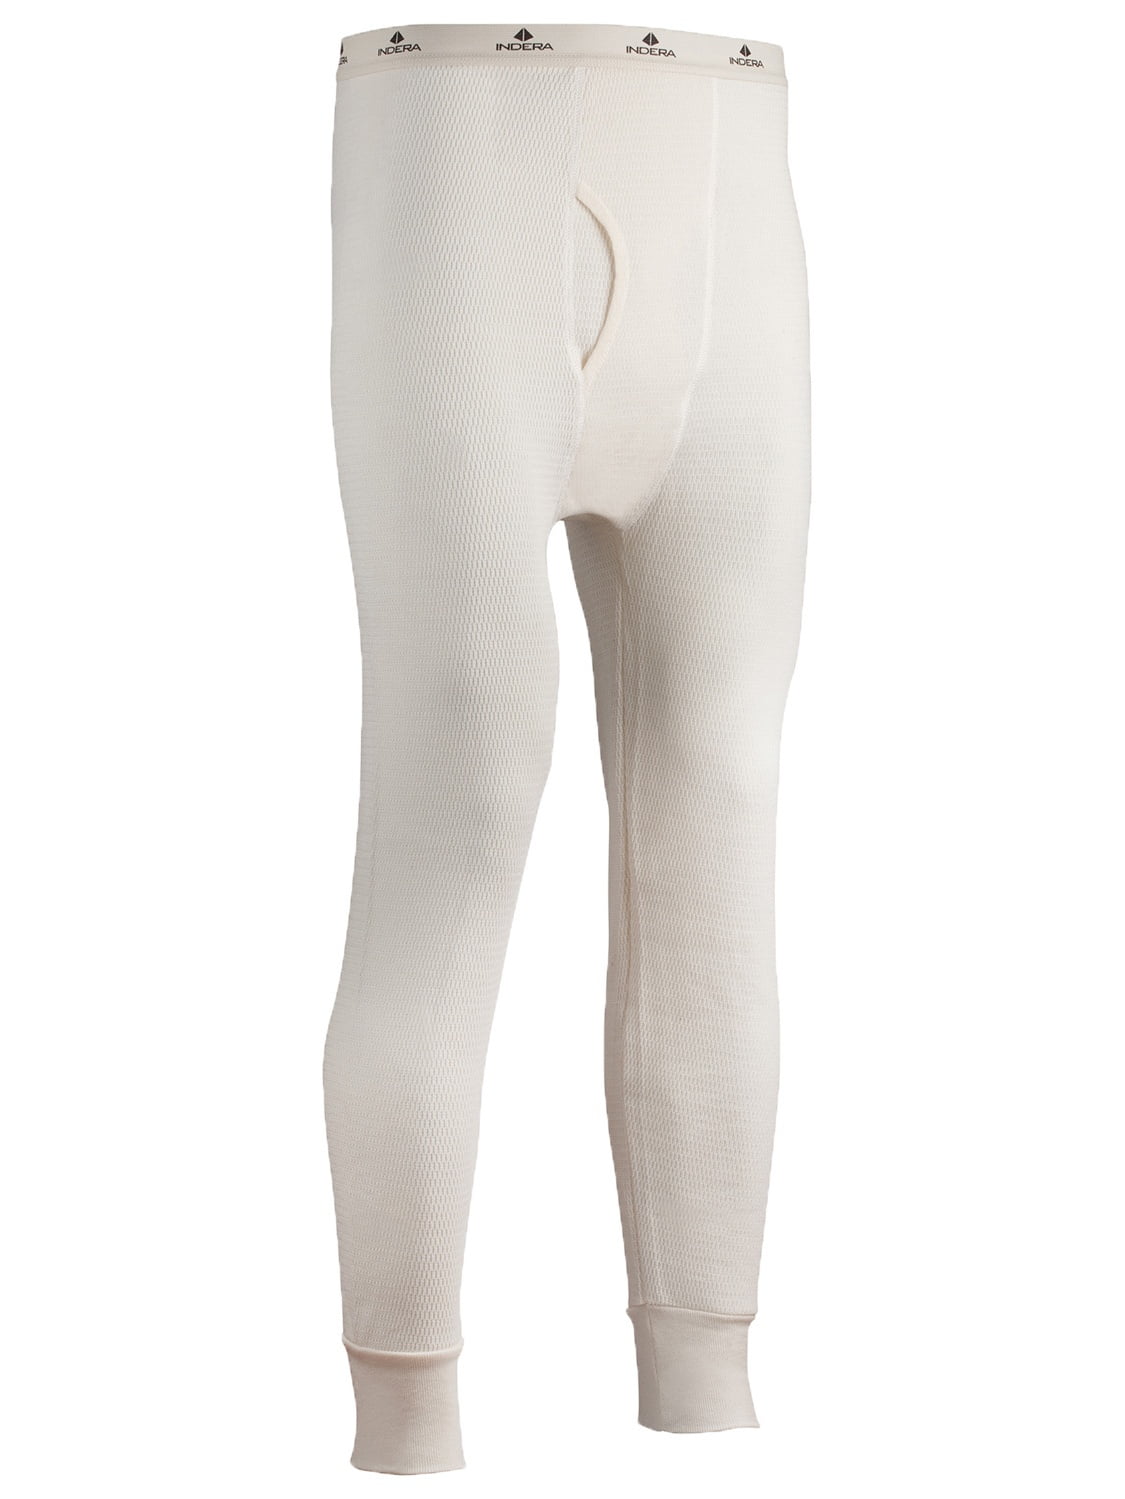 New Tall Men's Indera Mills Long Johns Thermal Underwear Set 4X 